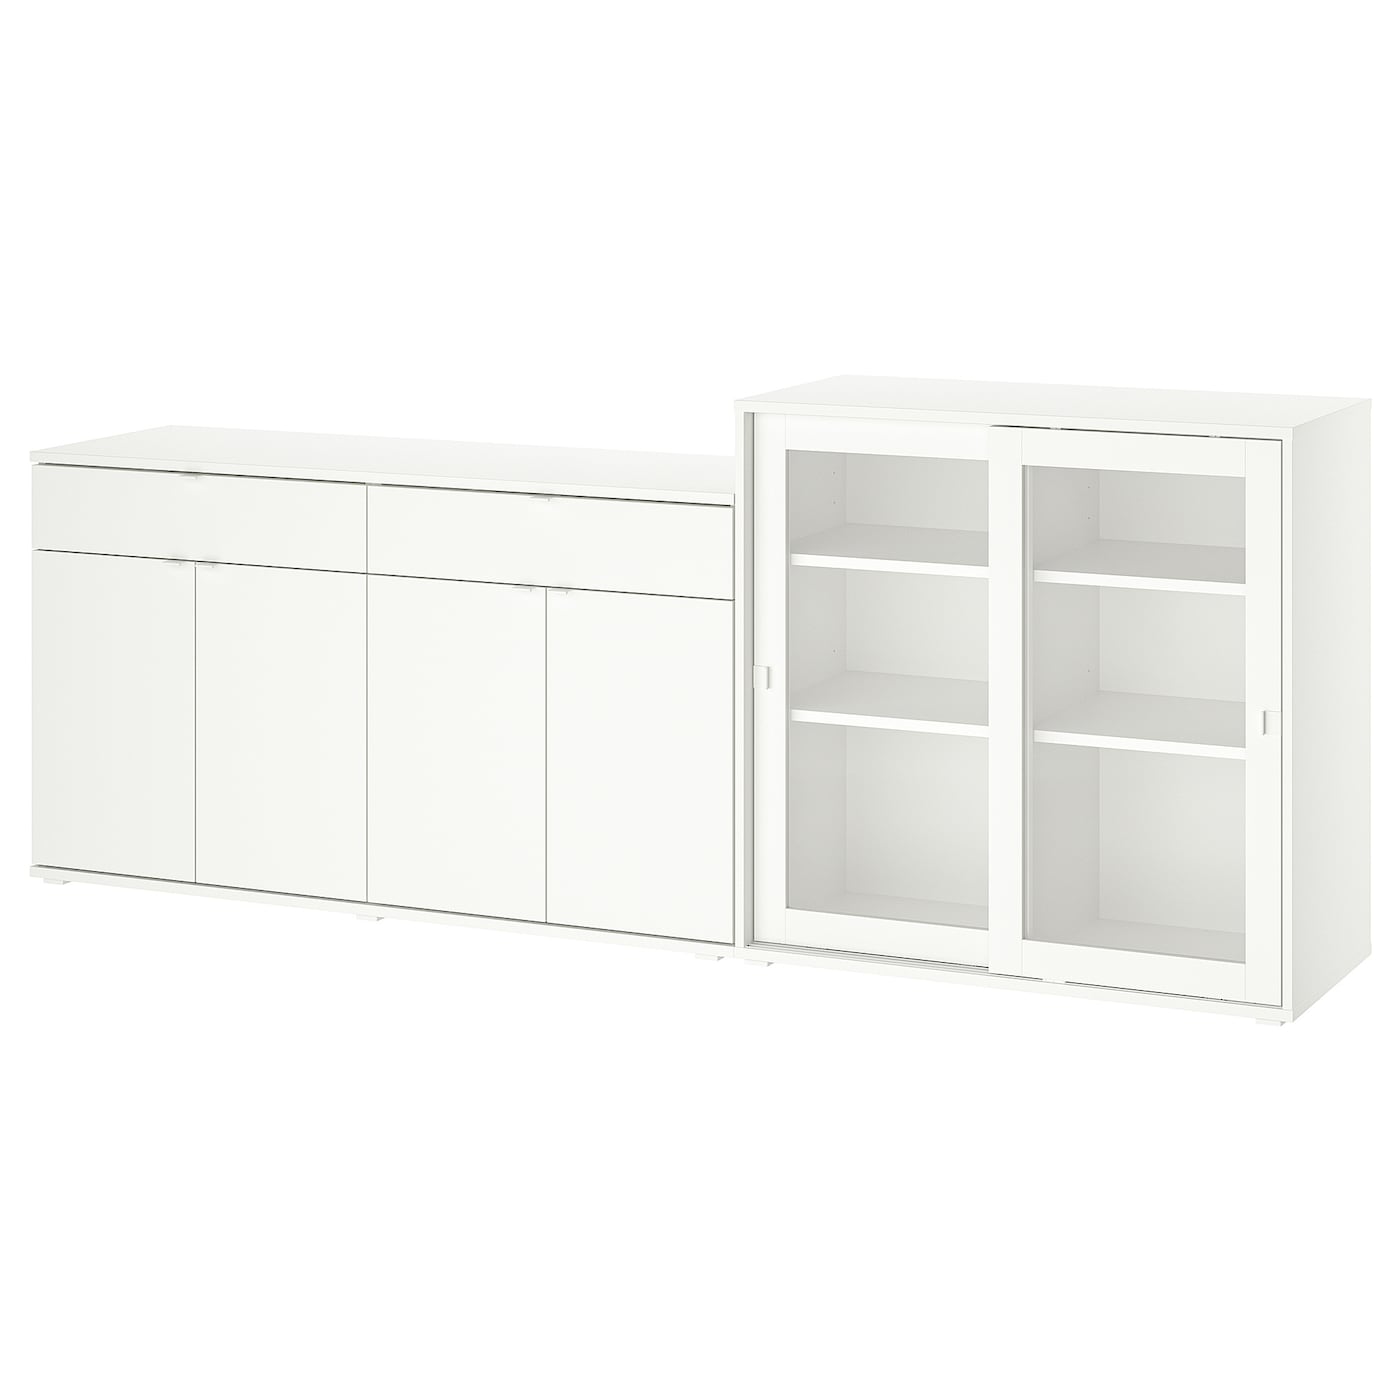 Книжный шкаф - VIHALS IKEA/ ВИХАЛС ИКЕА,   235х90 см, белый